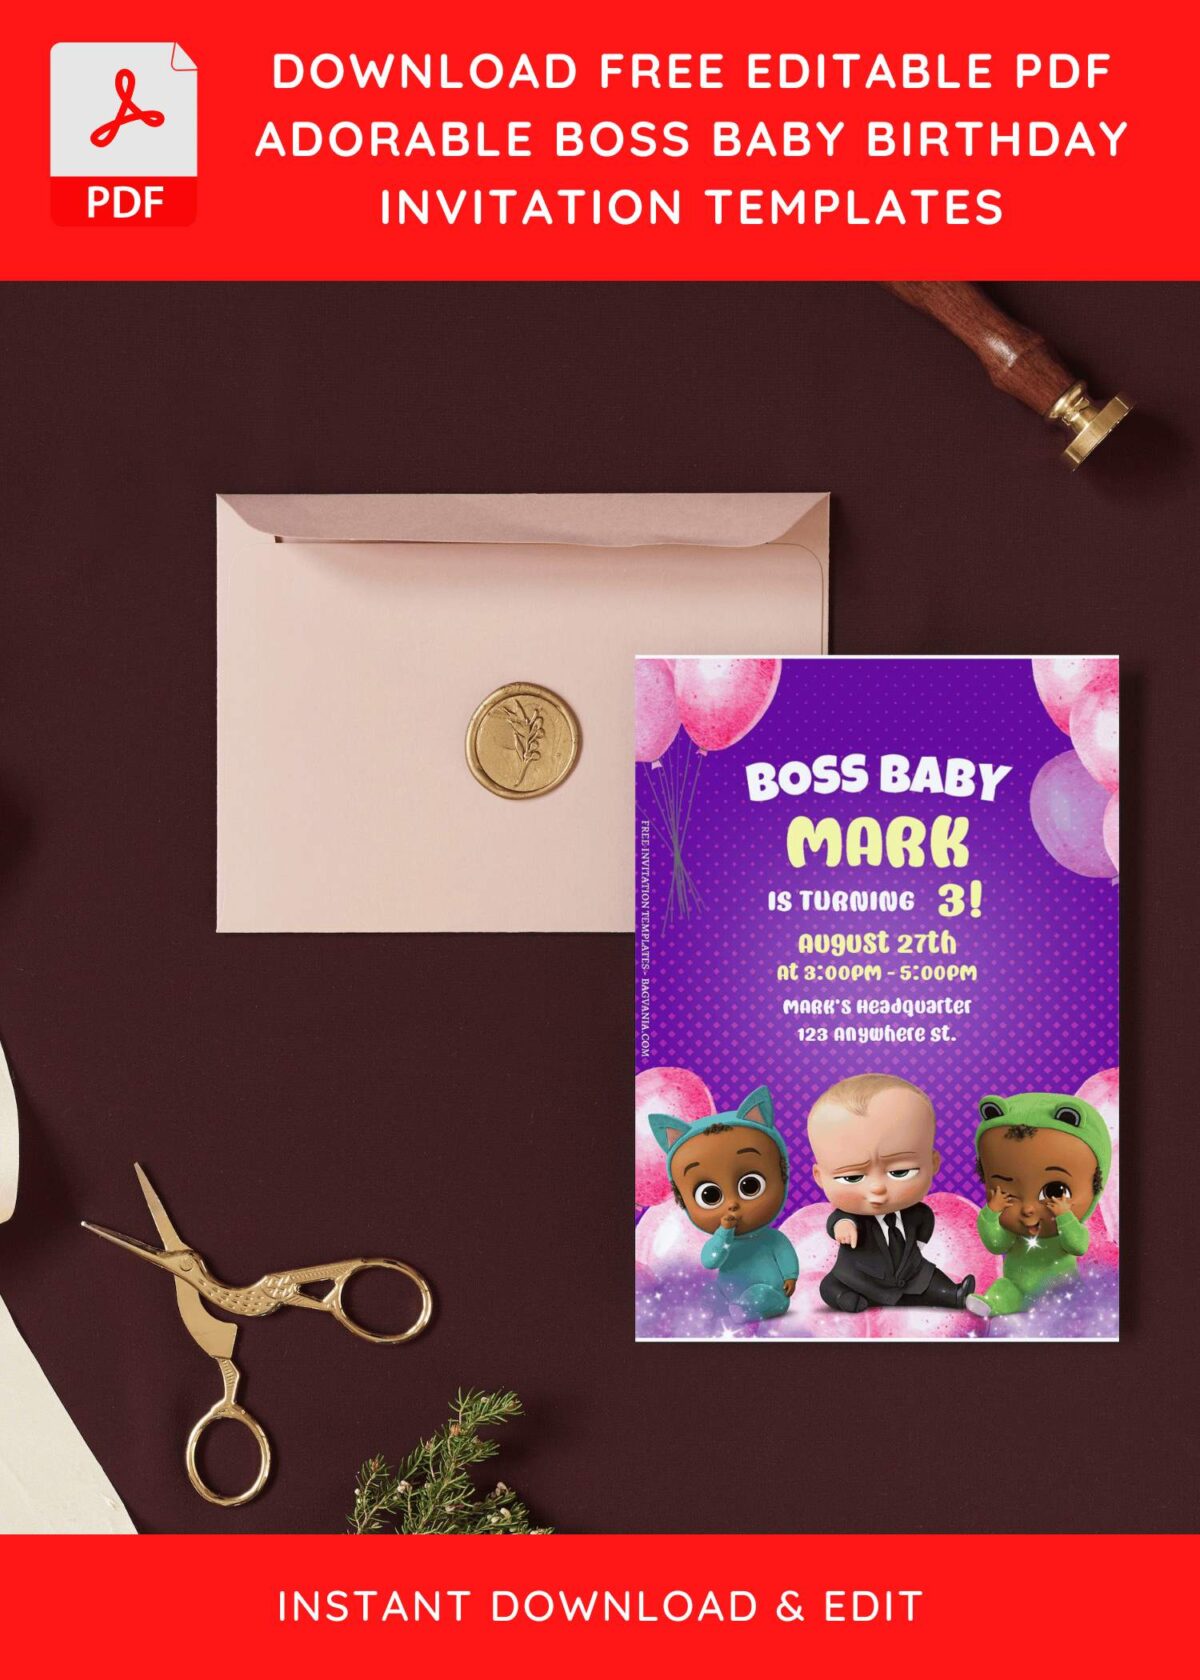 (Free Editable PDF) Festive Boss Baby Birthday Invitation Templates I